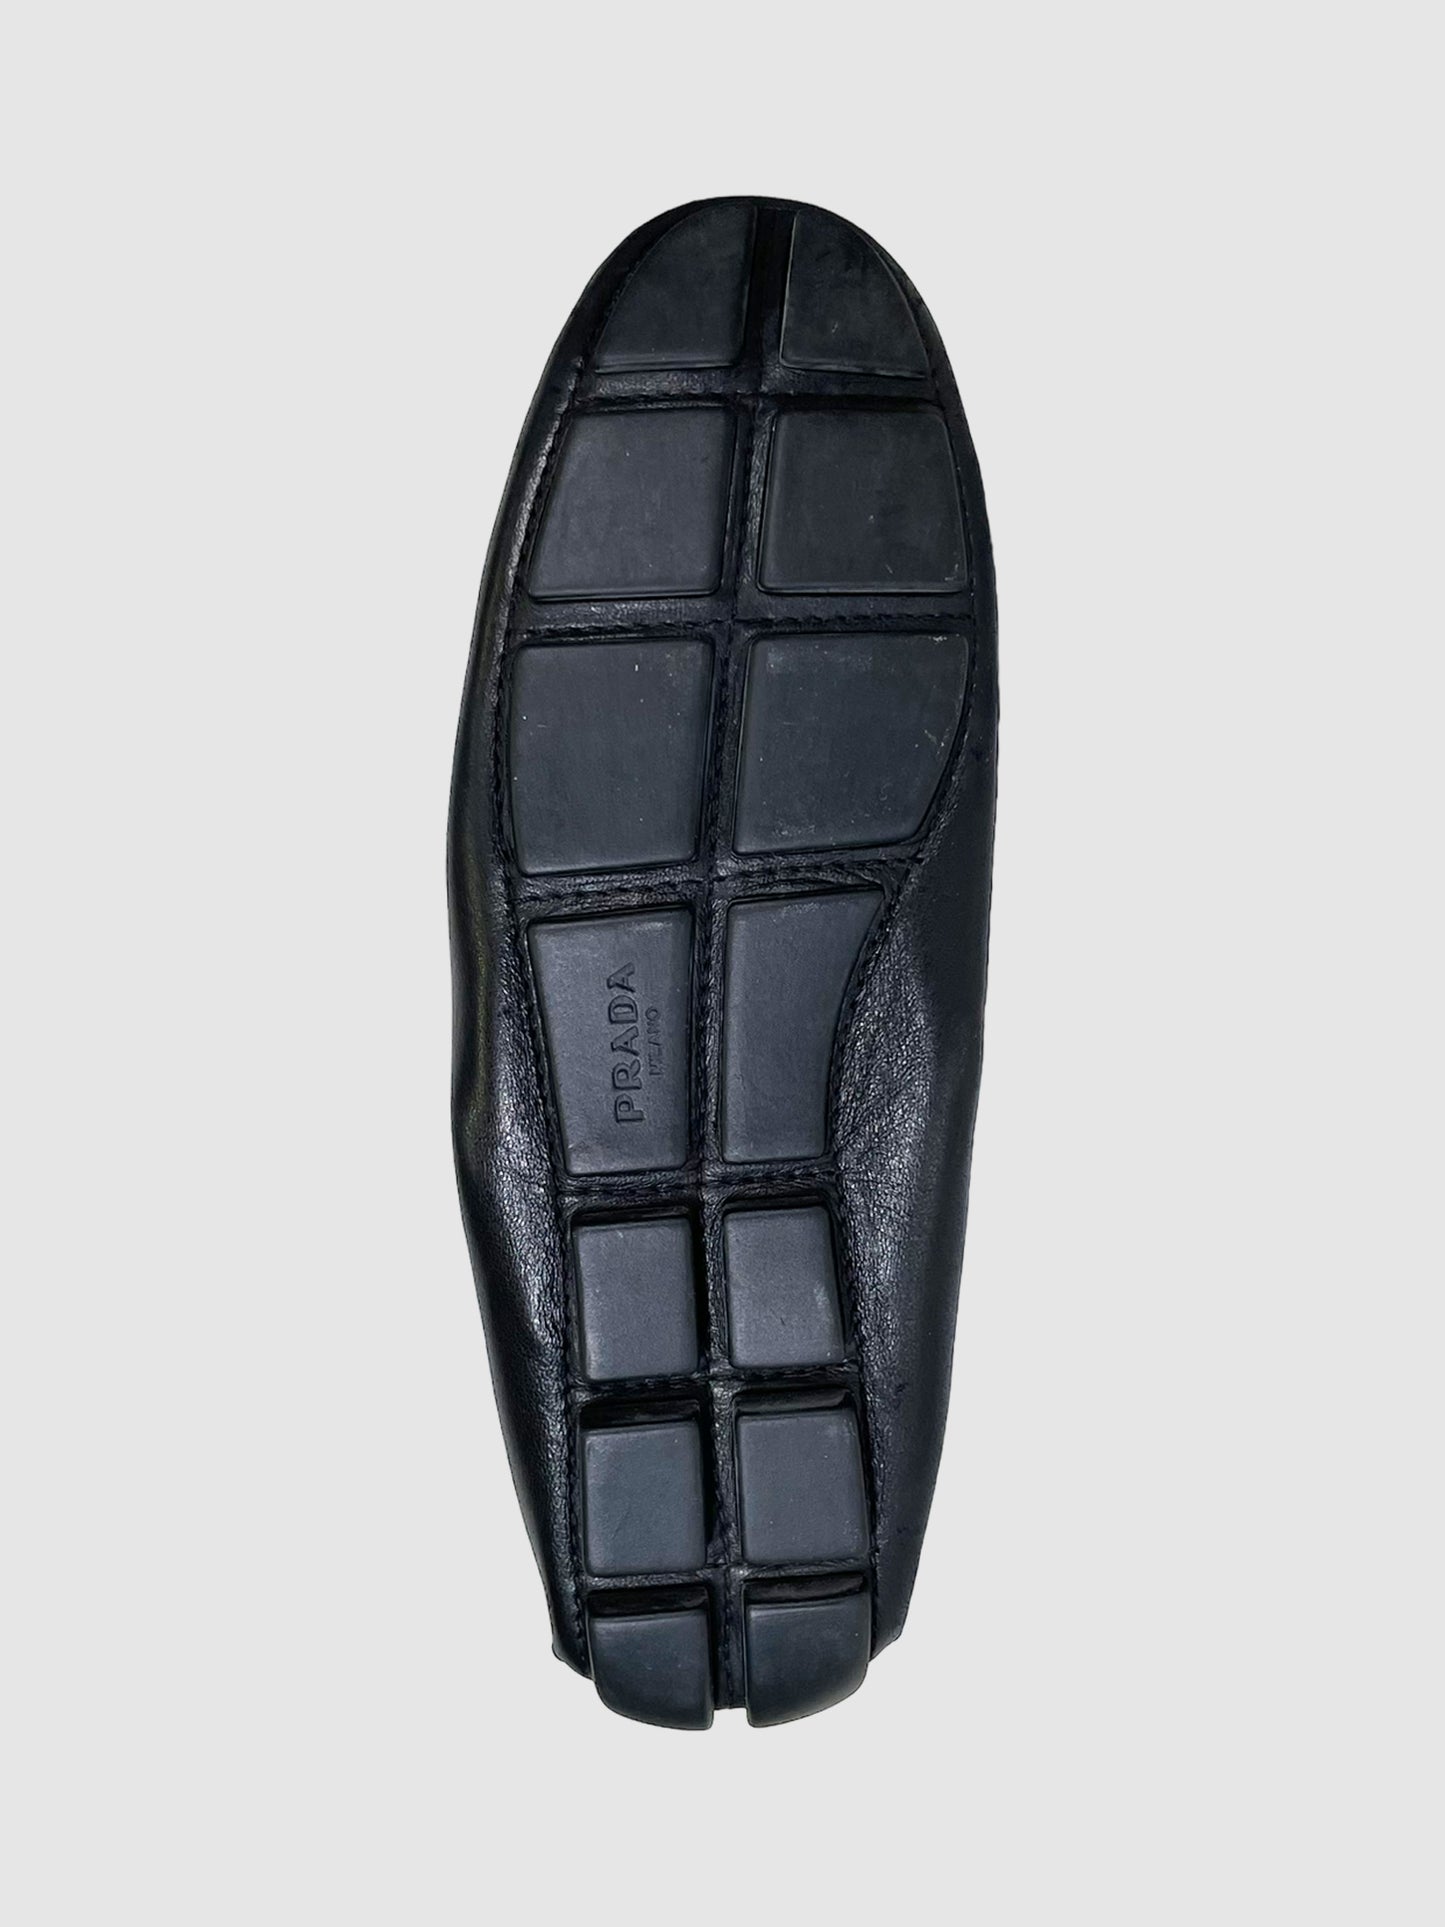 Prada Leather Scrunchie Loafers - Size 37.5